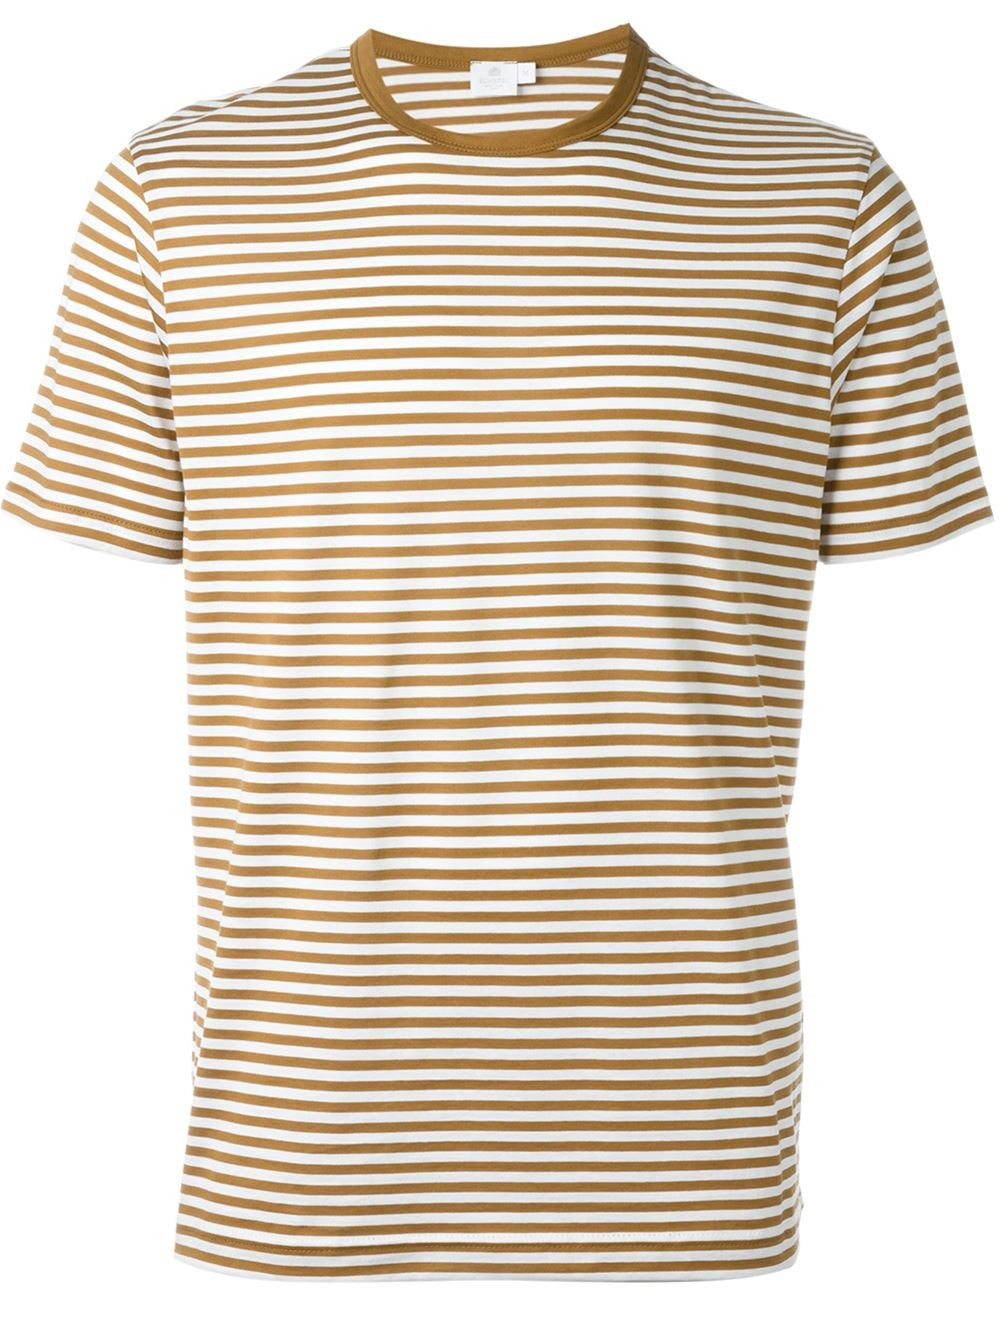 Lyst - Sunspel Striped T-shirt in Brown for Men